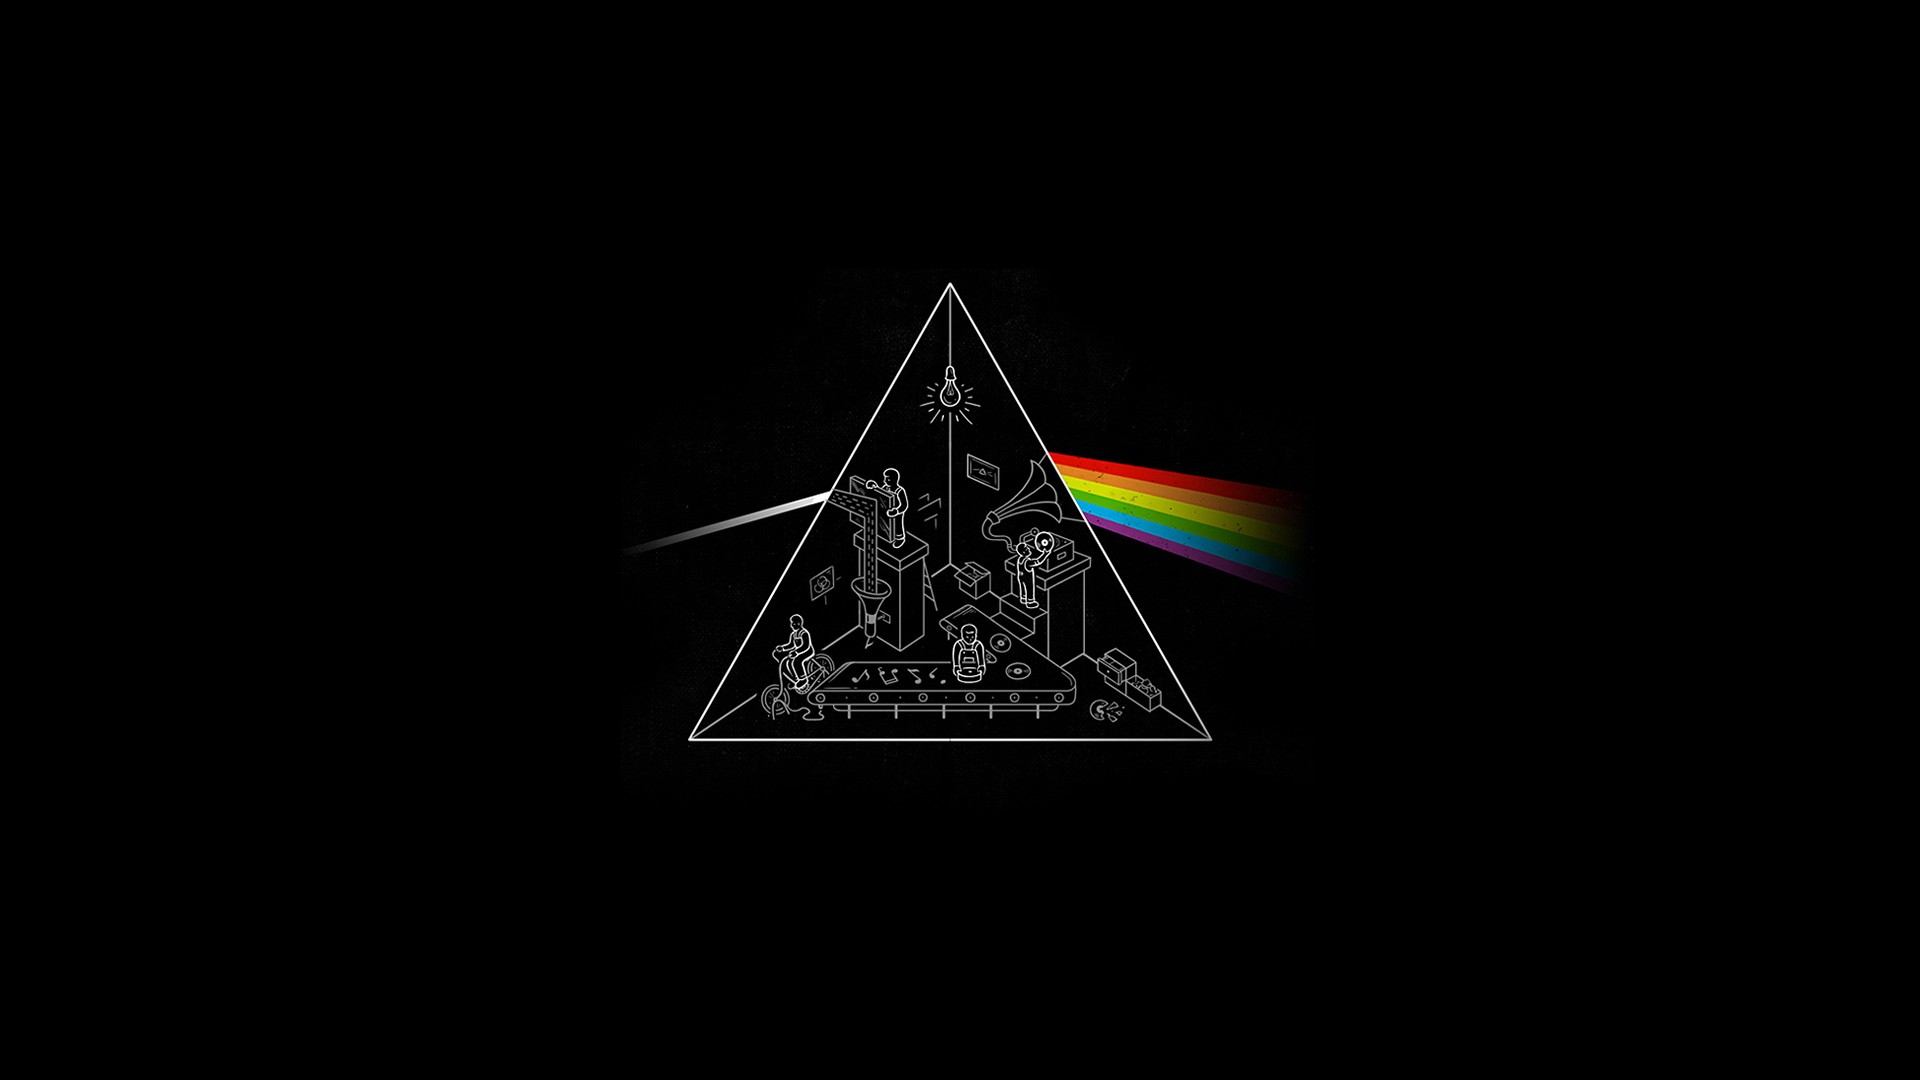 1920x1080 Pink Floyd hard rock classic retro bands groups album covers logo wallpaper | | 26105